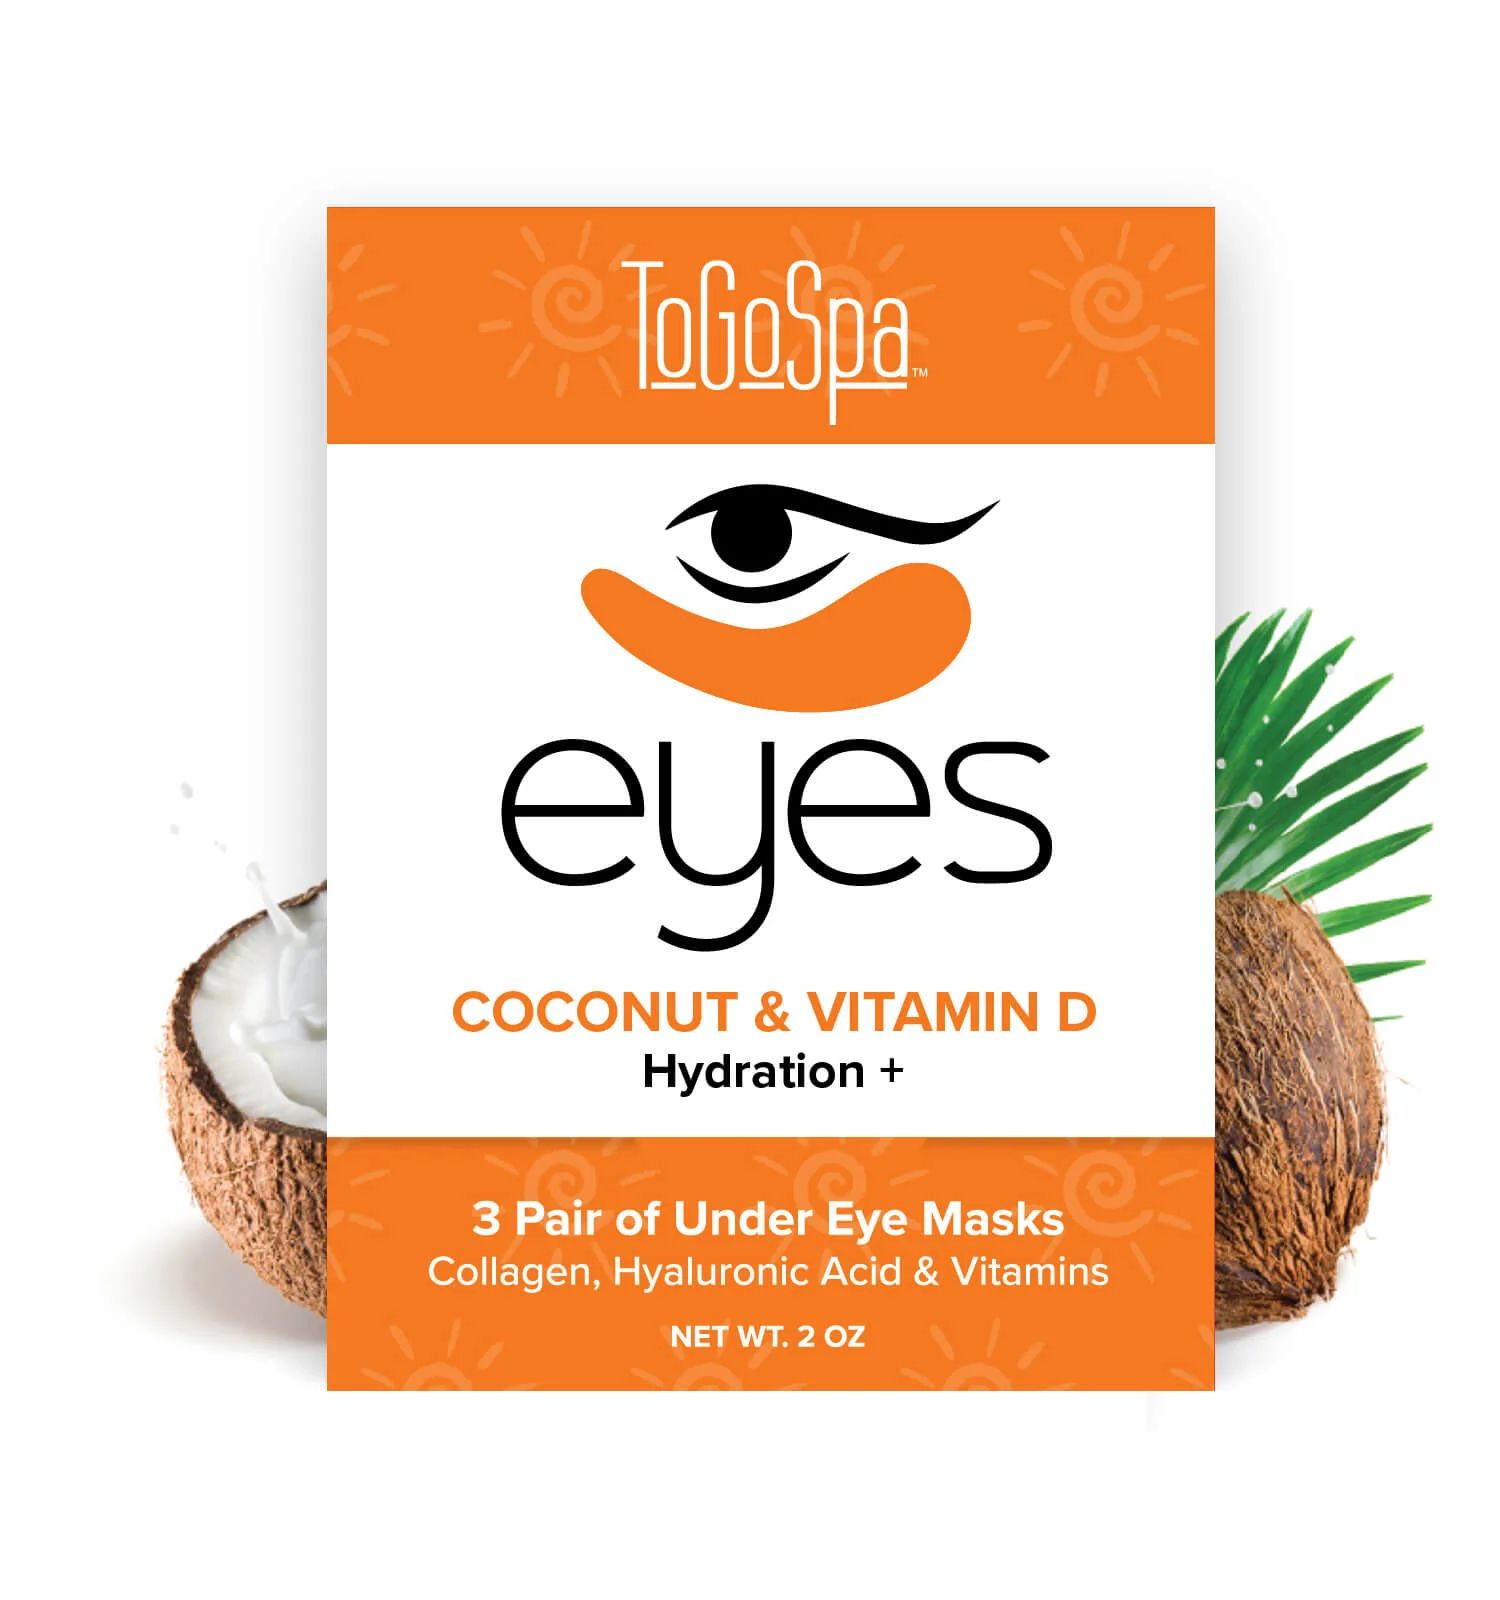 Coconut & Vitamin D Eyes | ToGoSpa